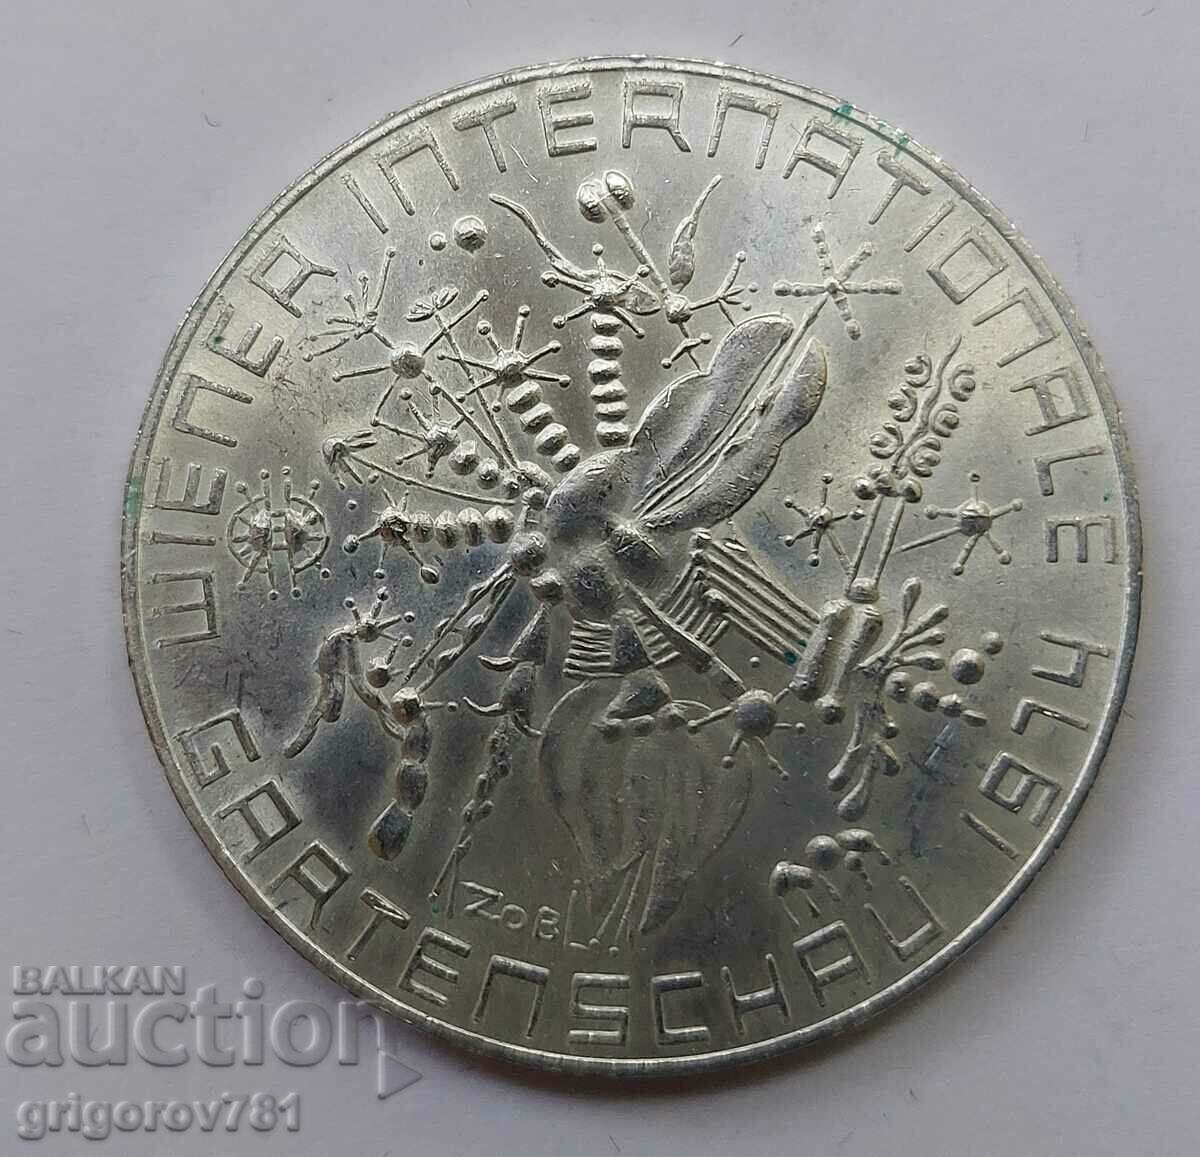 50 Shilling Silver Austria 1974 - Silver Coin #20